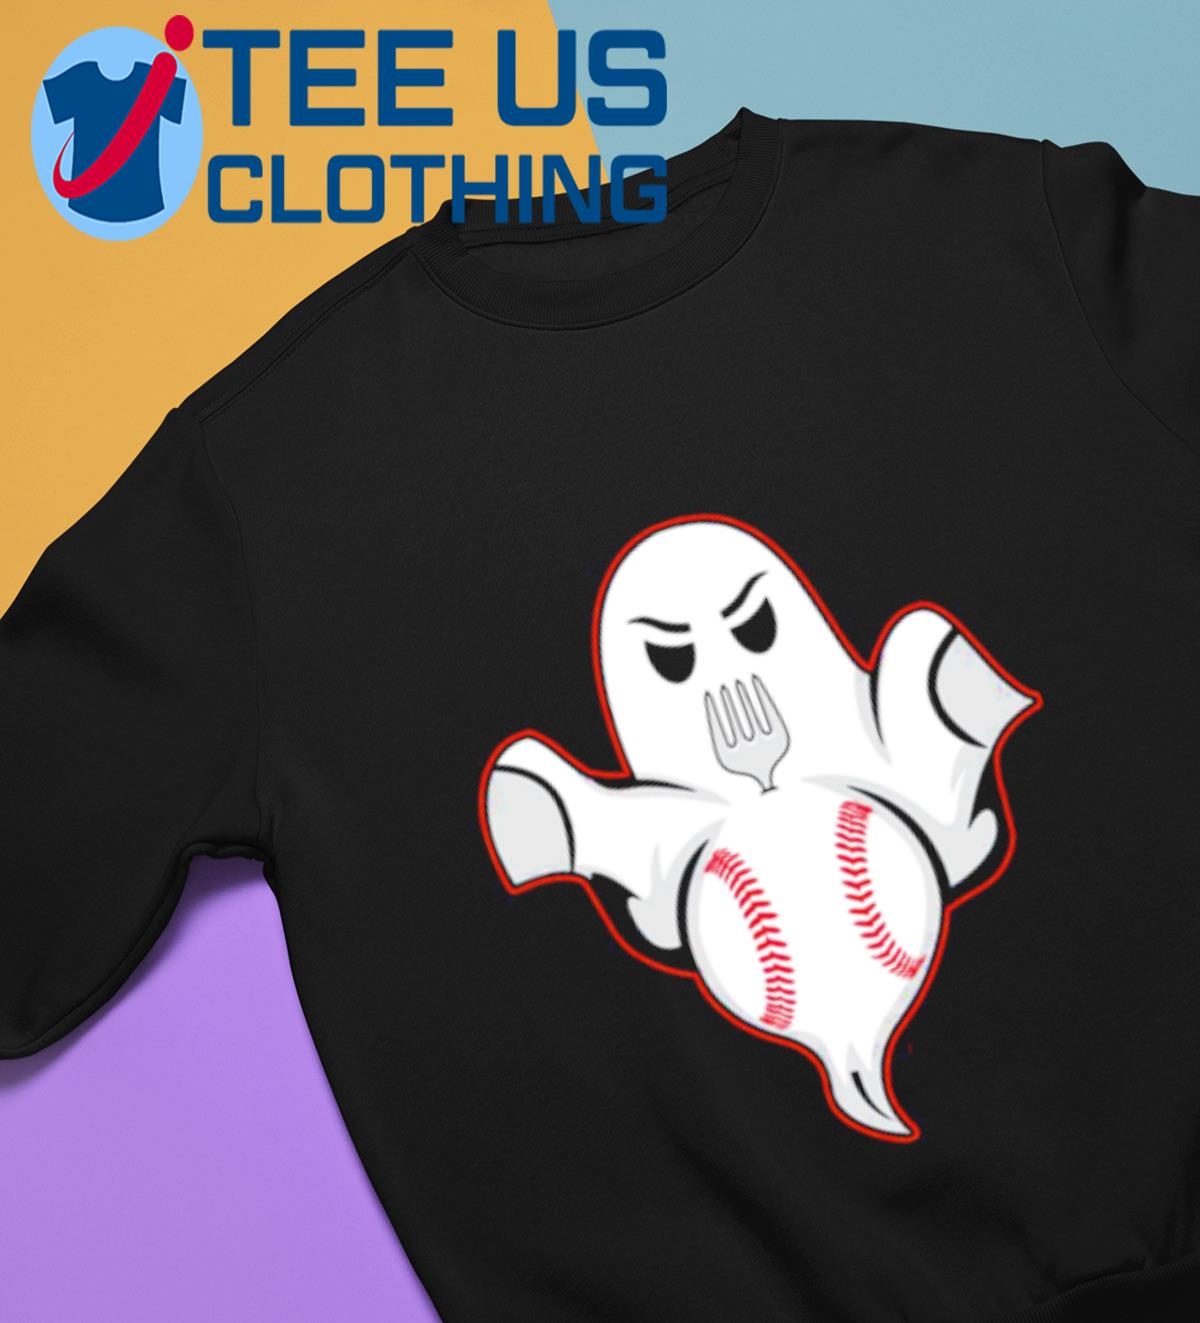 Kodai Senga New York Mets Ghost Fork 2023 shirt, hoodie, sweater